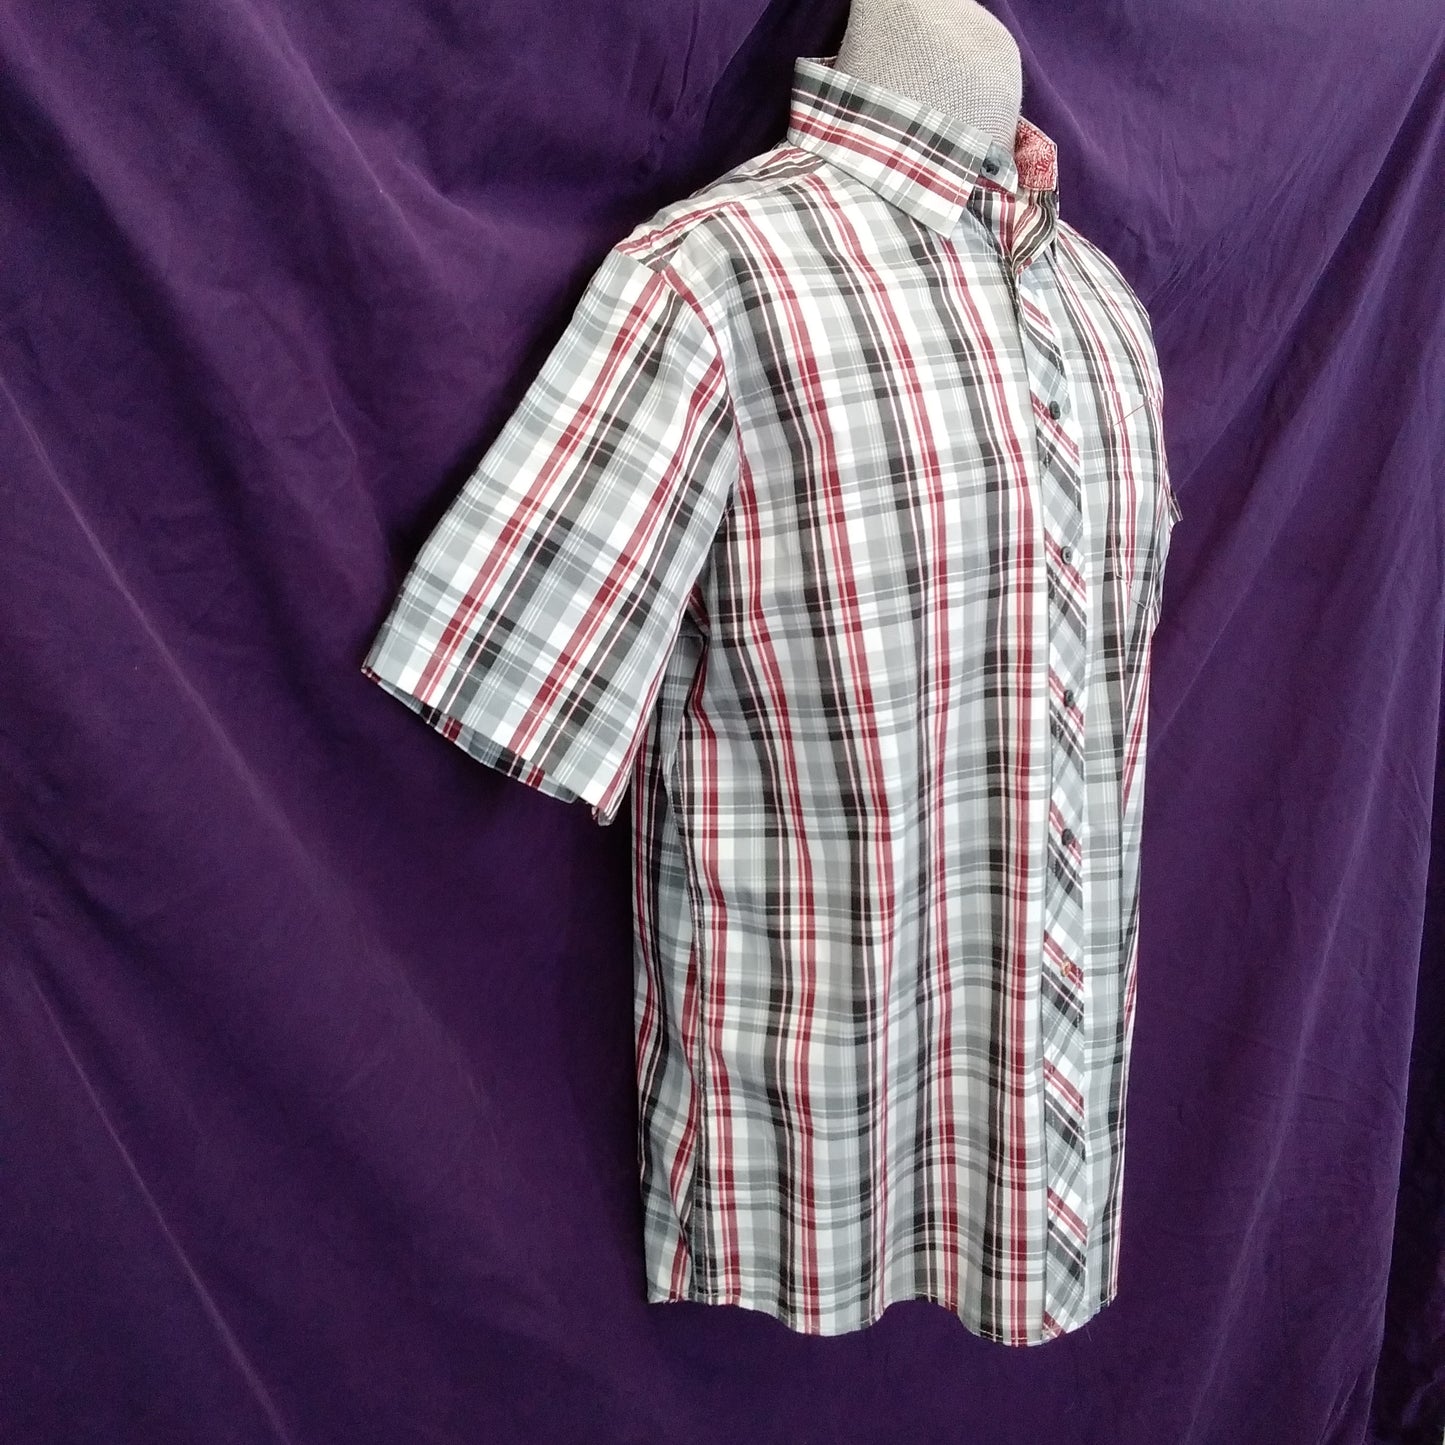 Ecko Unltd Plaid Short Sleeve Button Up Shirt - Large